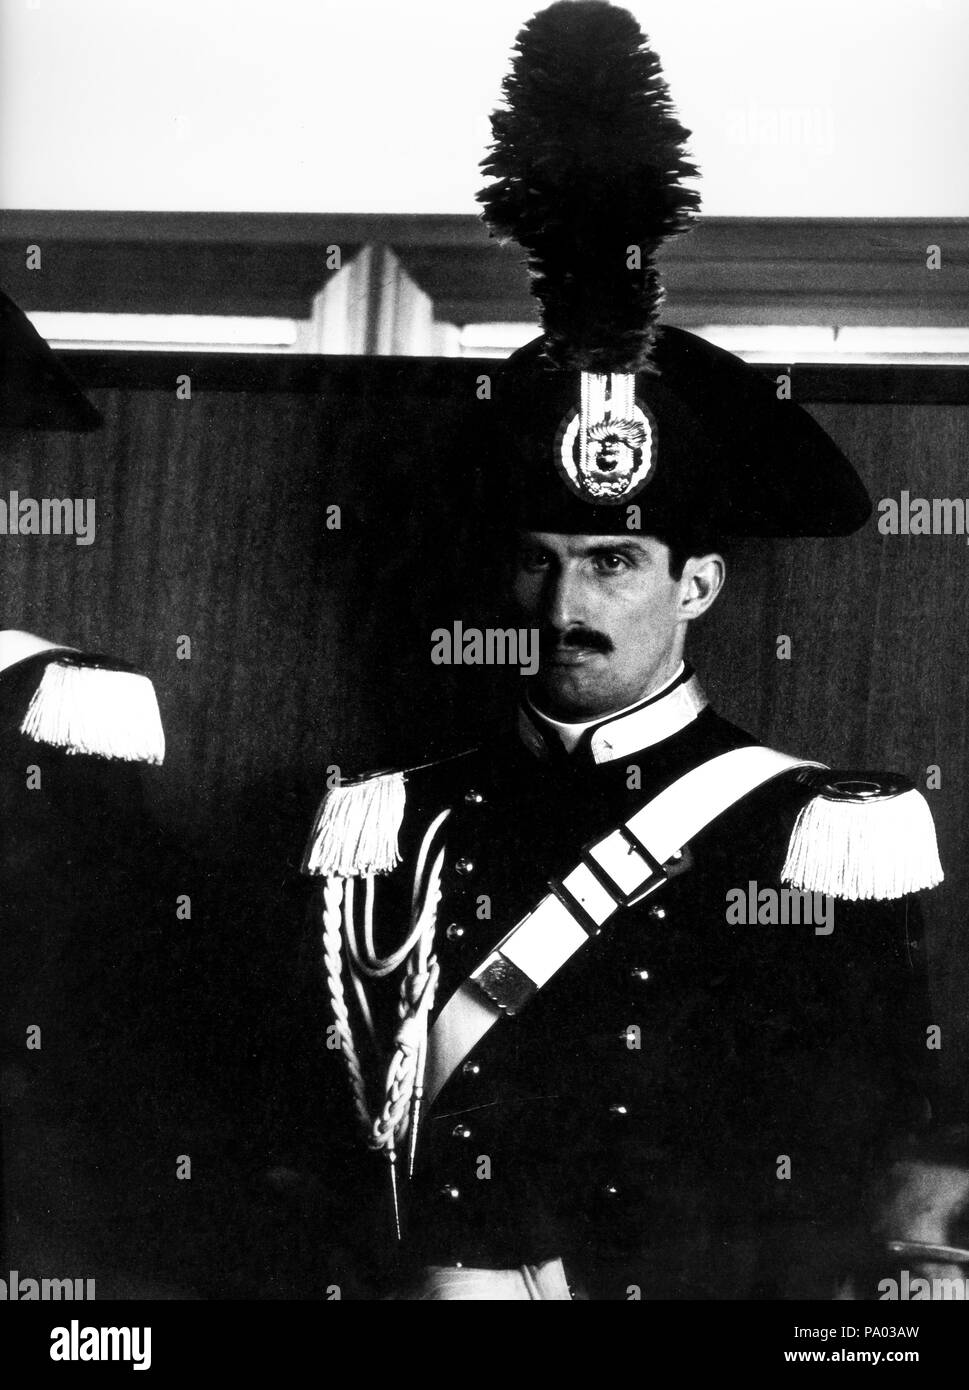 Carabinieri in tribunale, 70s Foto Stock